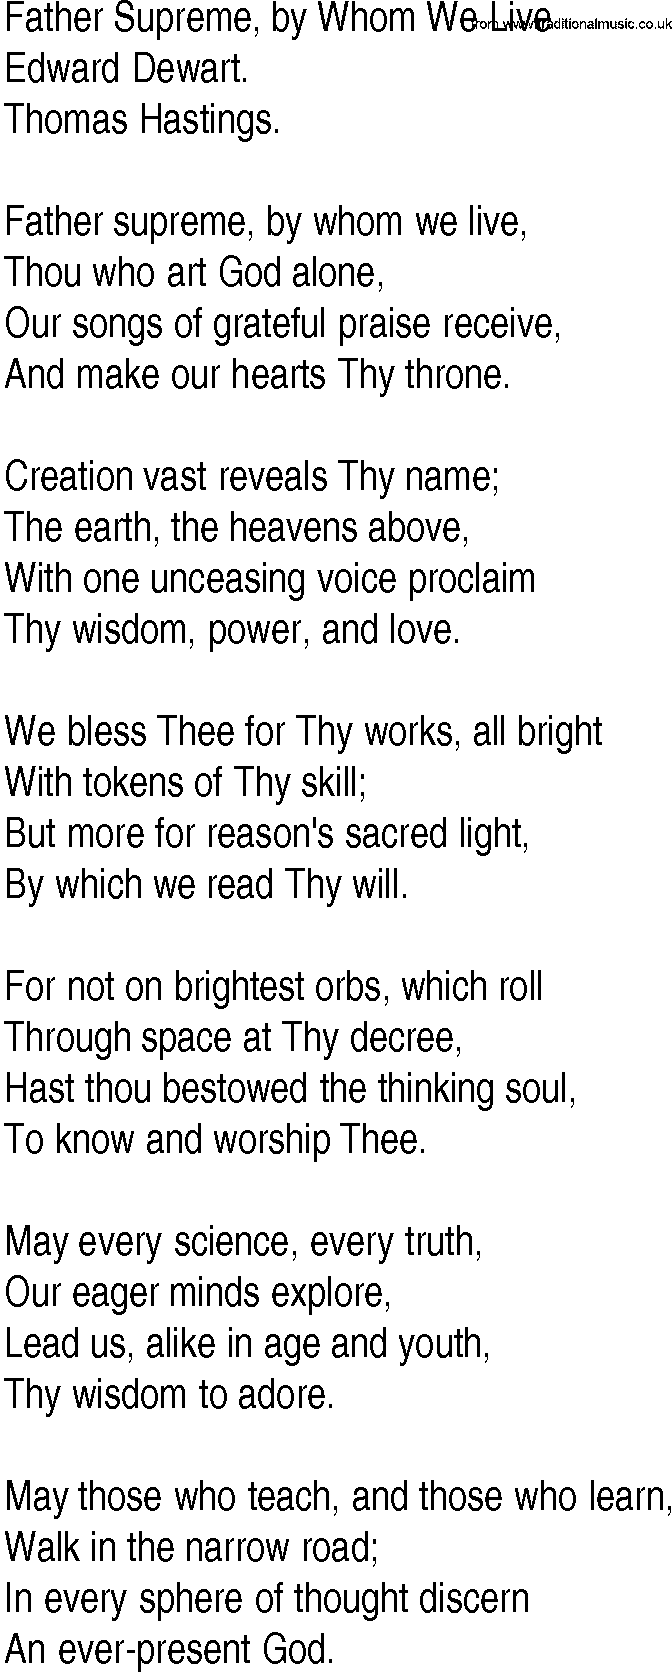 Hymn and Gospel Song: Father Supreme, by Whom We Live by Edward Dewart lyrics